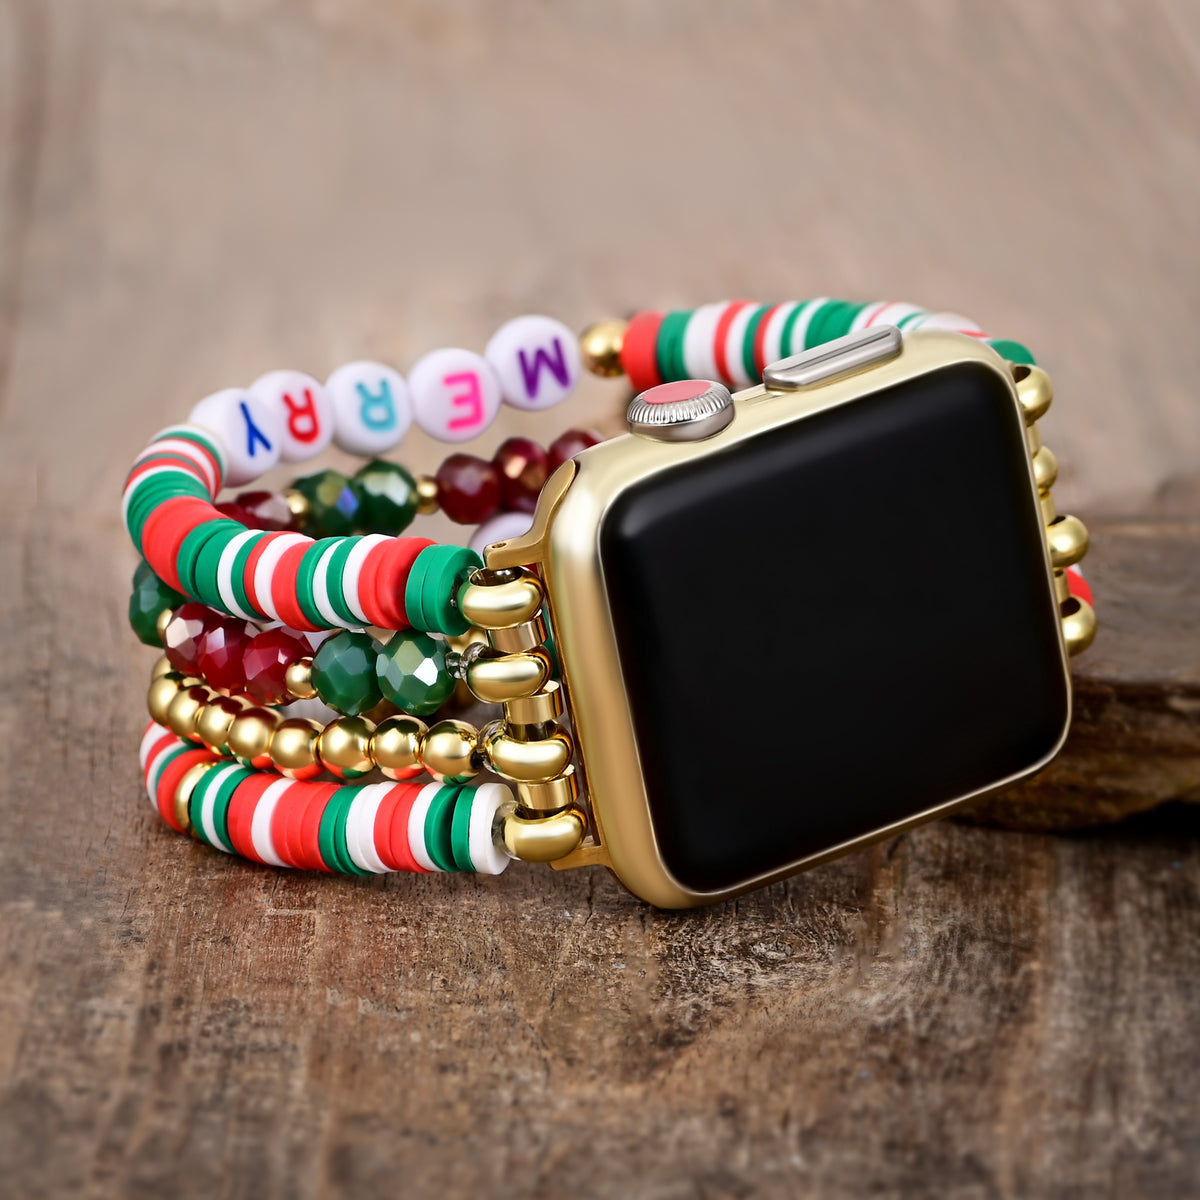 Cinturino Apple Watch elasticizzato Merry Cane